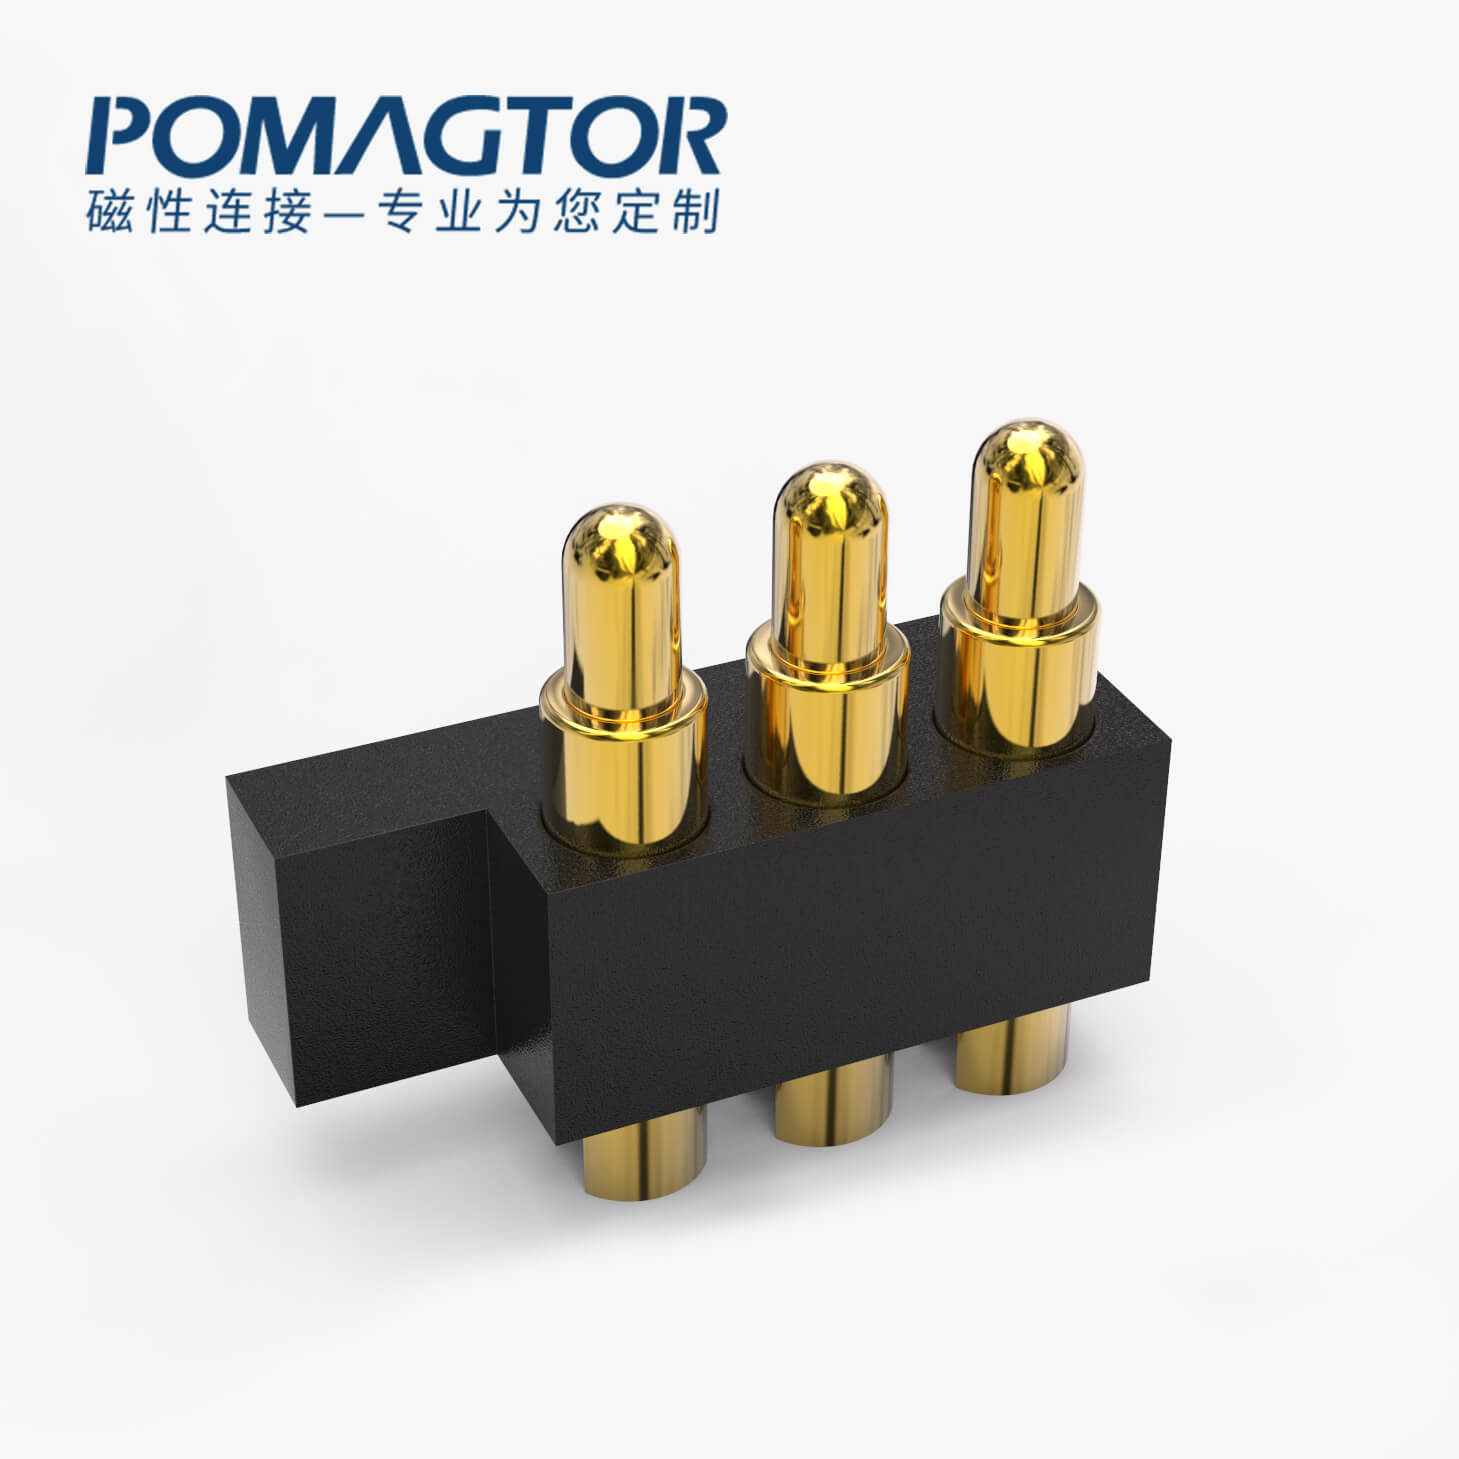 POGO PIN连接器 侧帖式：3PIN，电镀黄铜Au3u，电压12V，电流4.5A，工作行程1.2mm:70gfMax，弹力30000次+，工作温度-30°~85°